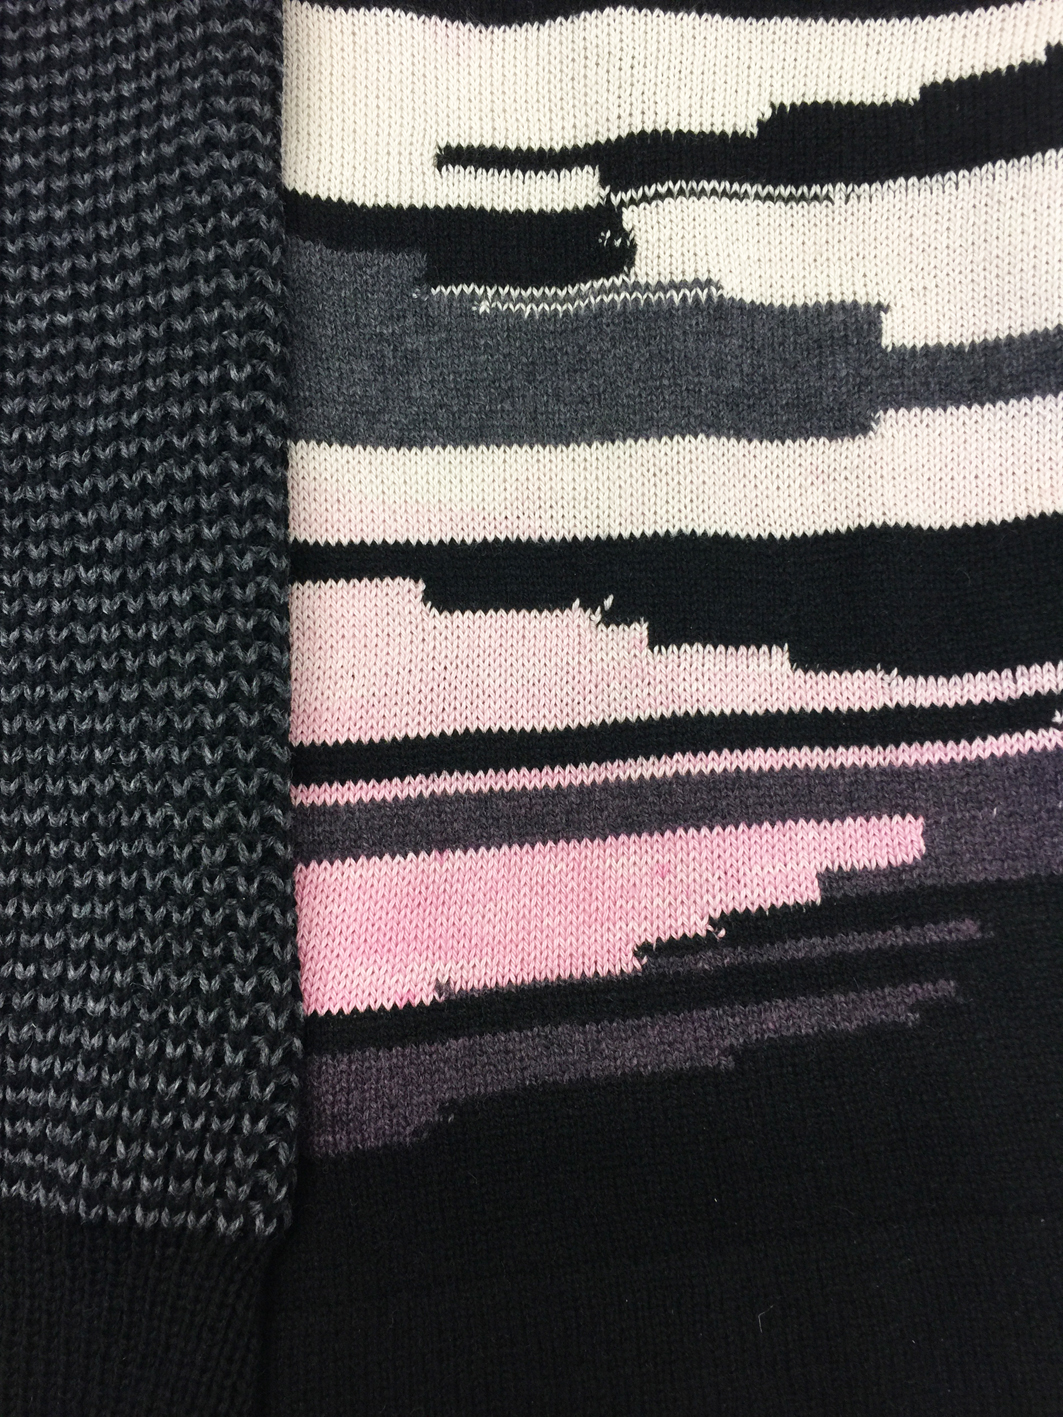 design Textiles knit fabrics knitwear